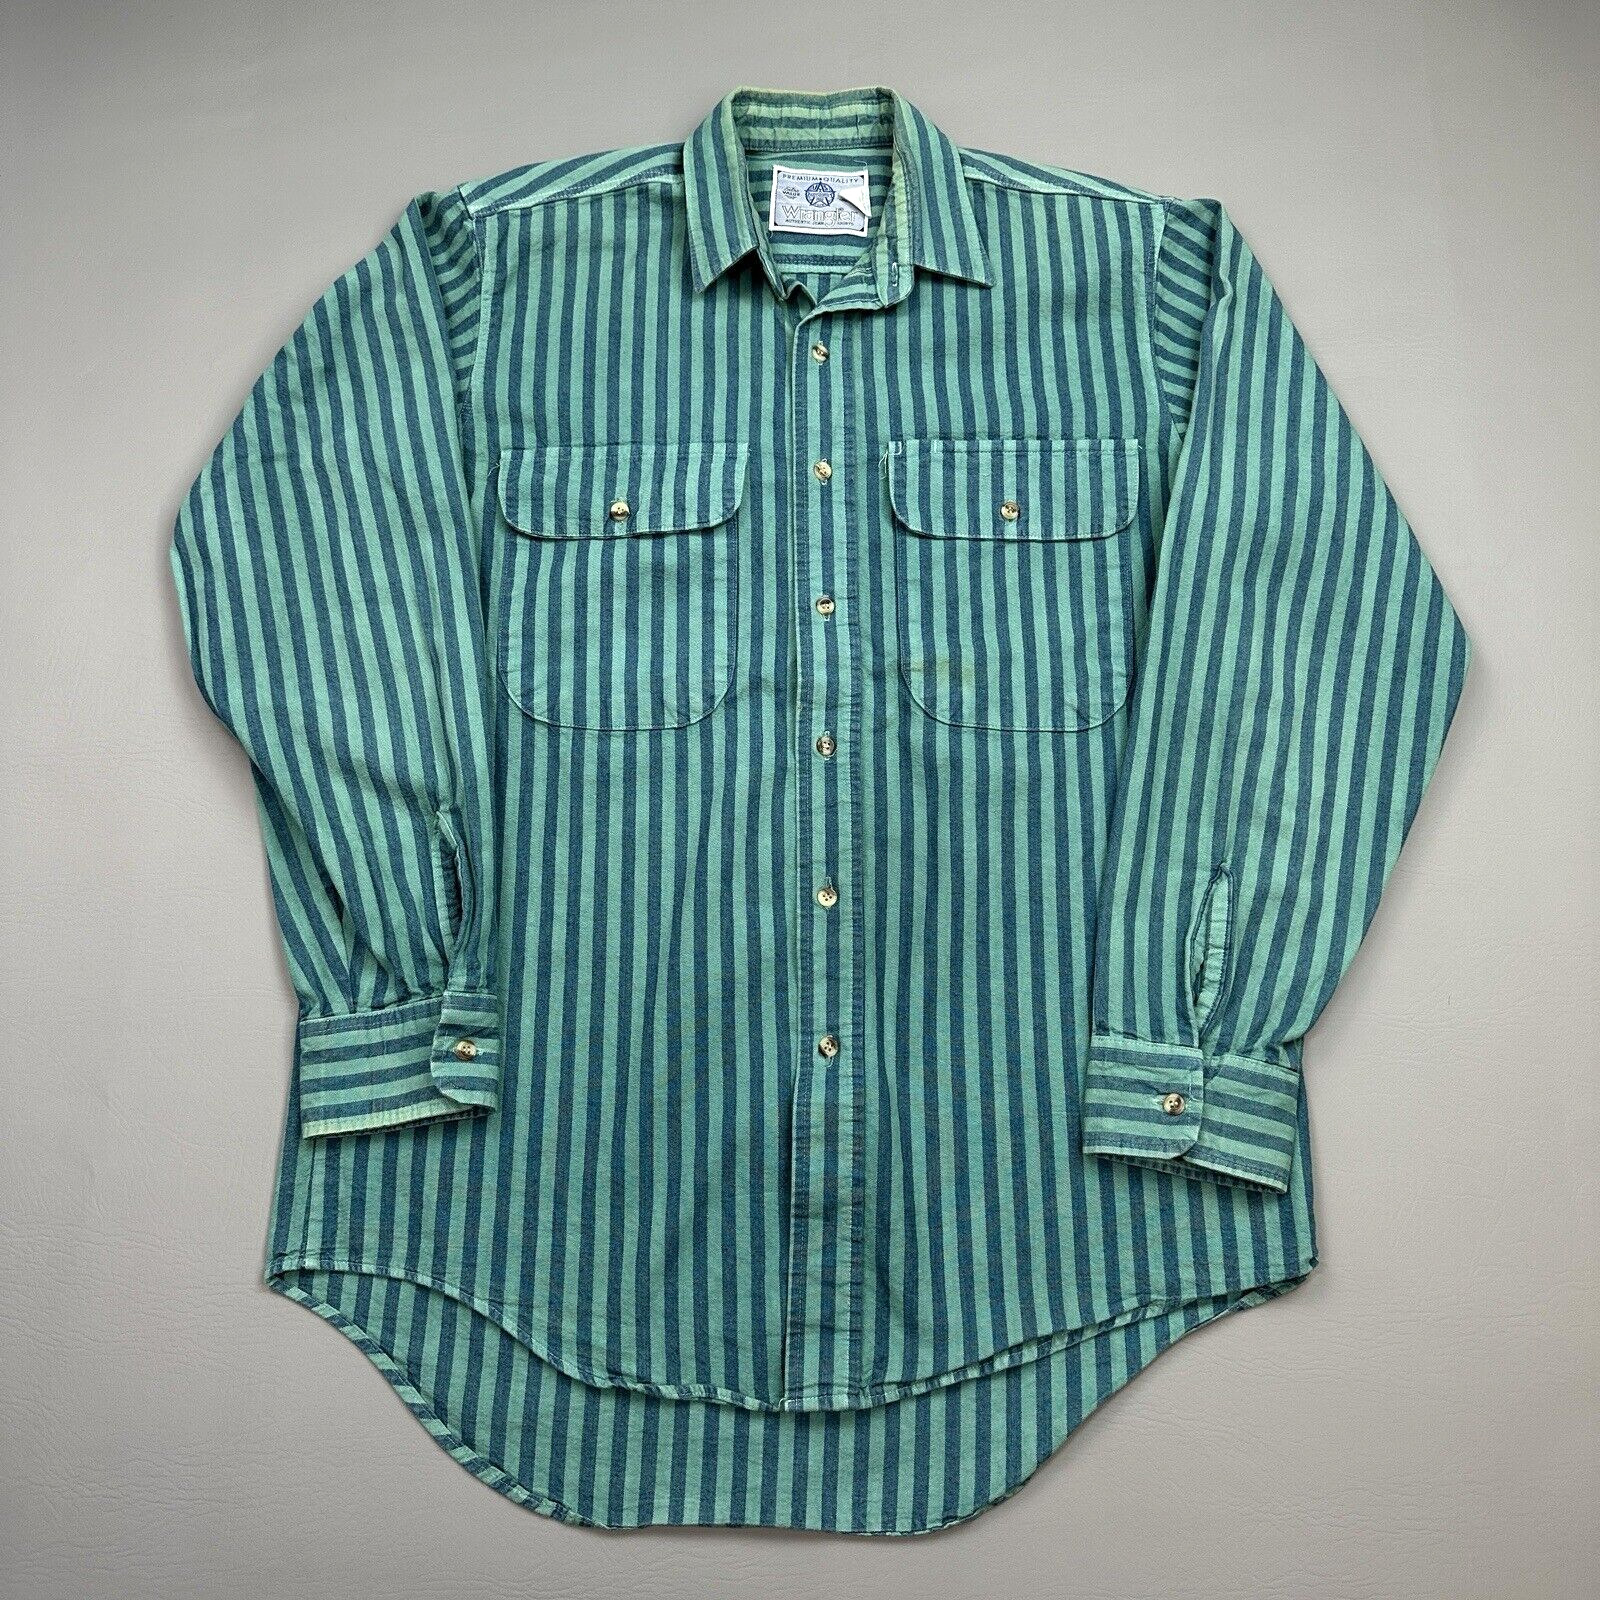 Vintage Wrangler Shirt Mens Medium Green Striped Denim Cowboy Western USA Made